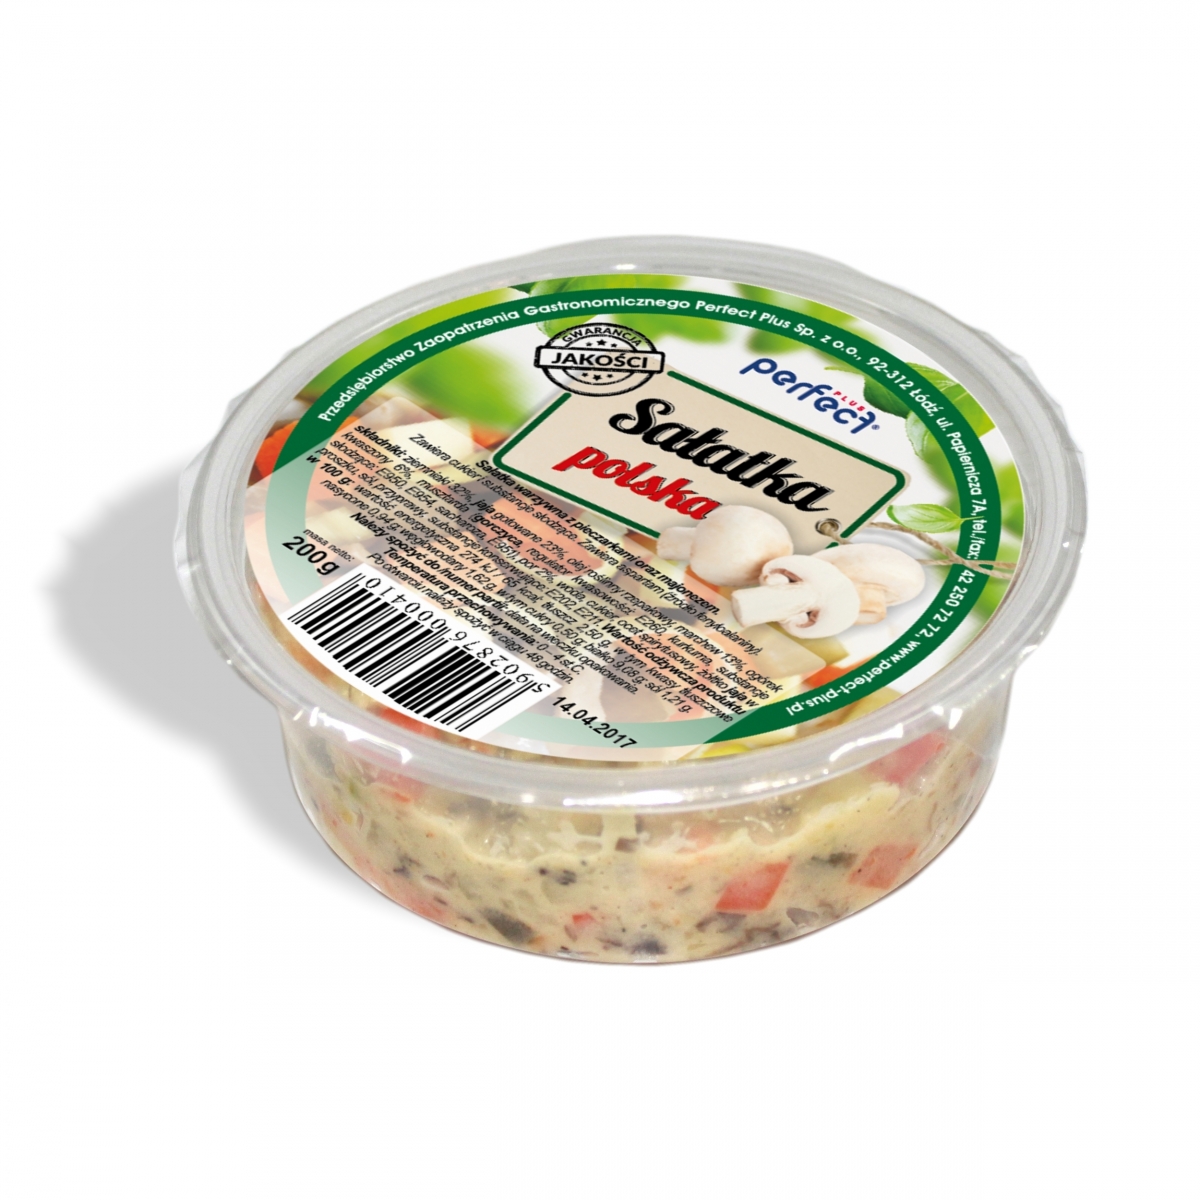 Polish salad